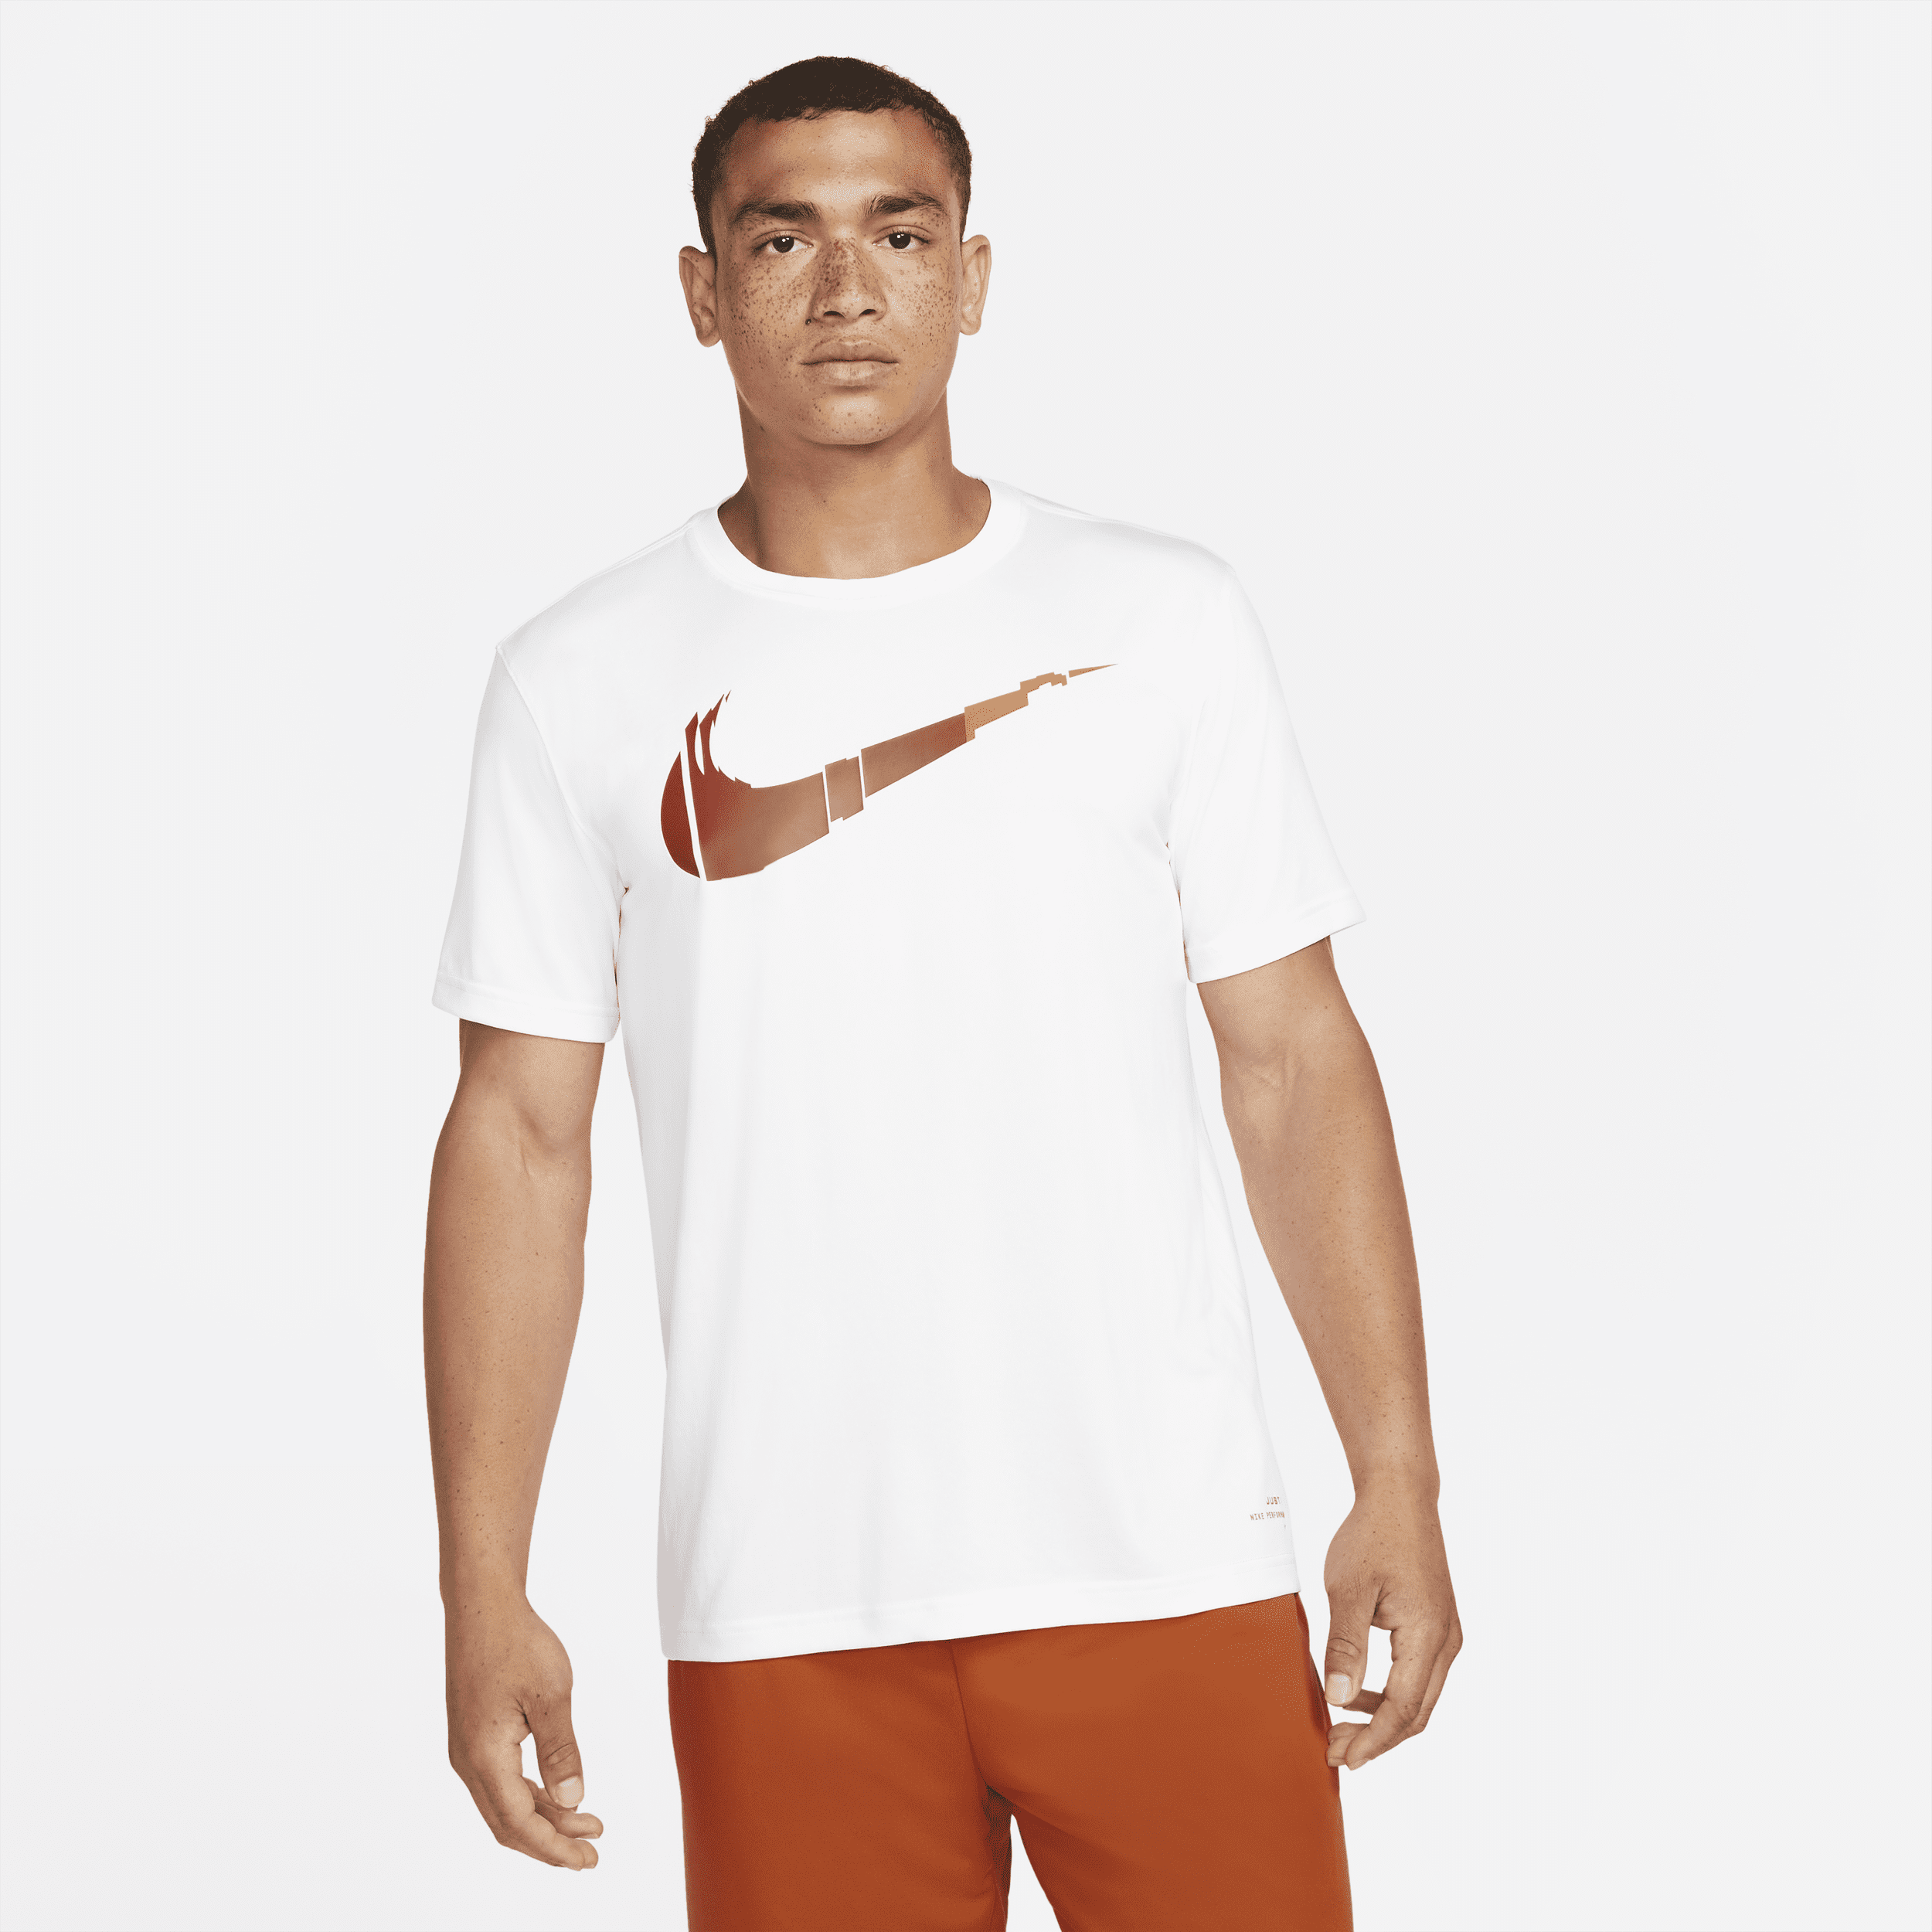 T-shirt da training Nike Dri-FIT - Uomo - Bianco